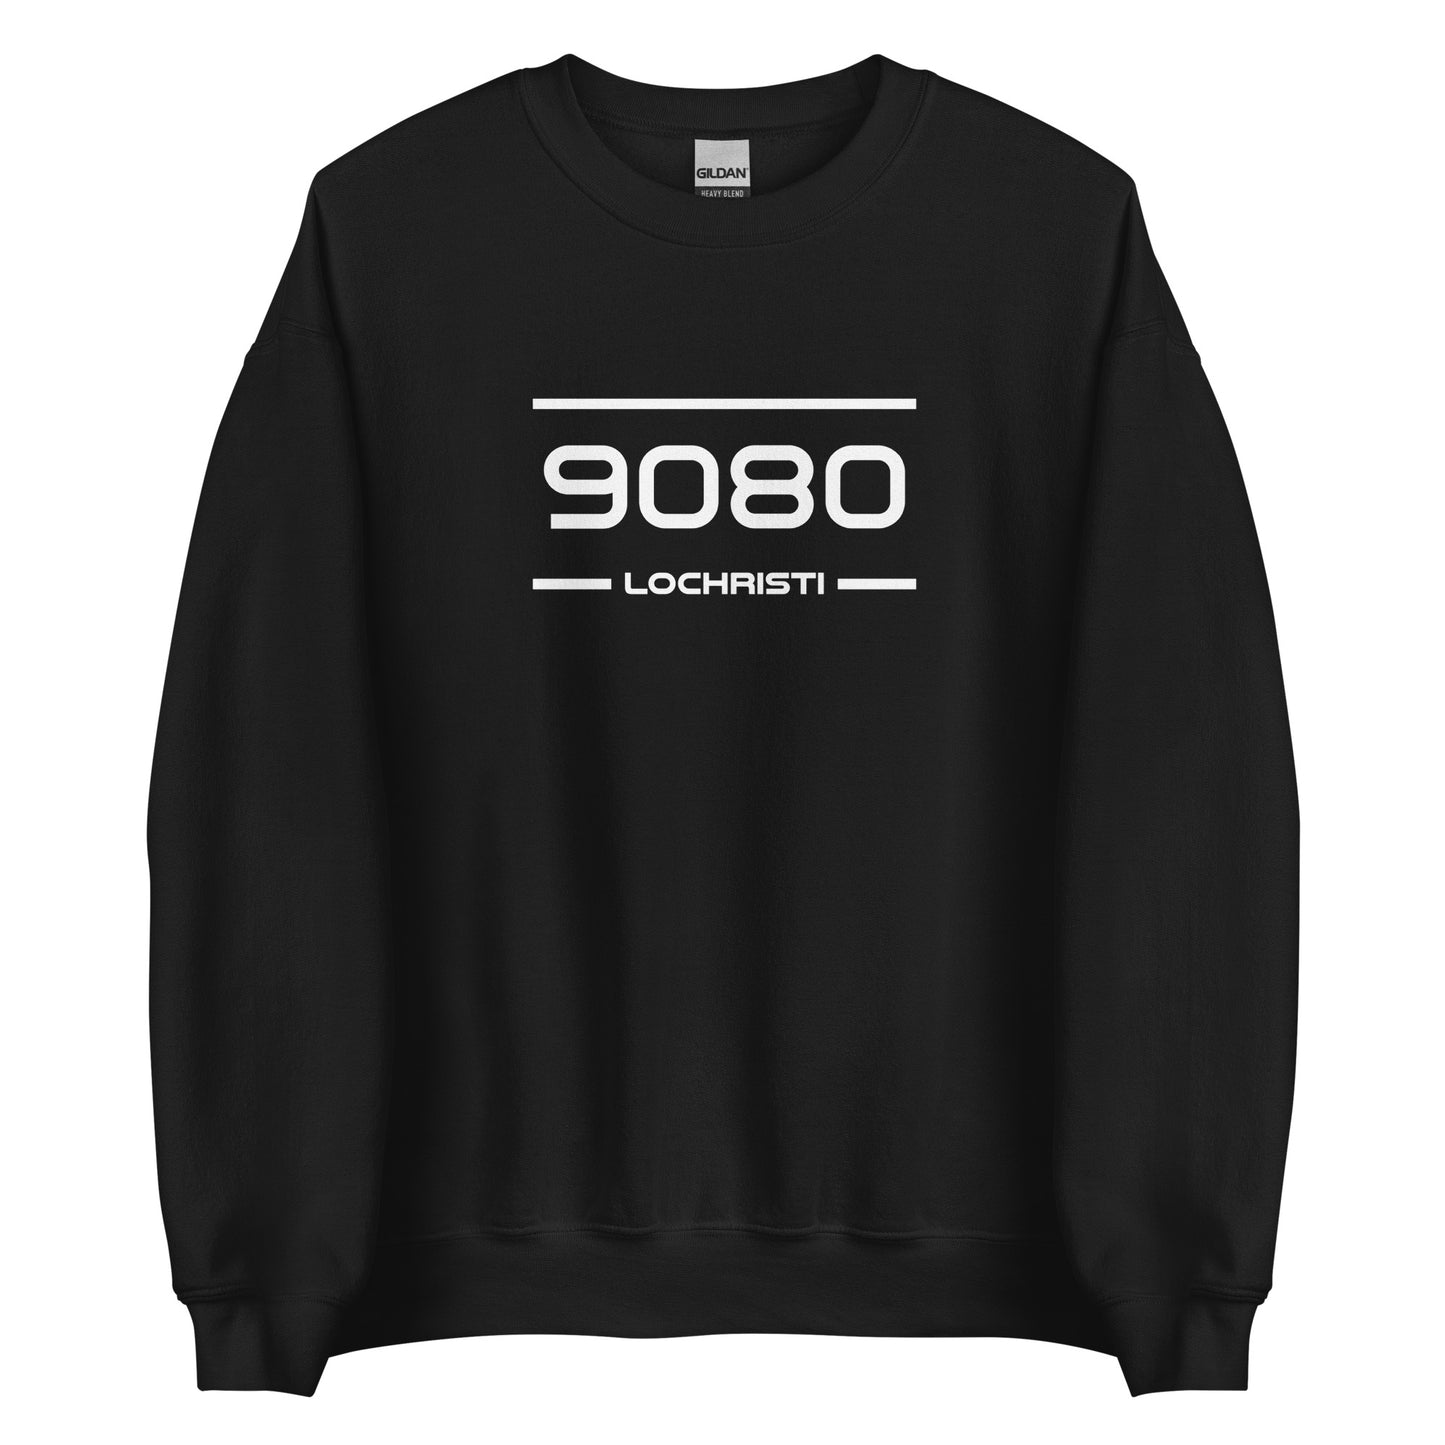 Sweater - 9080 - Lochristi (M/V)